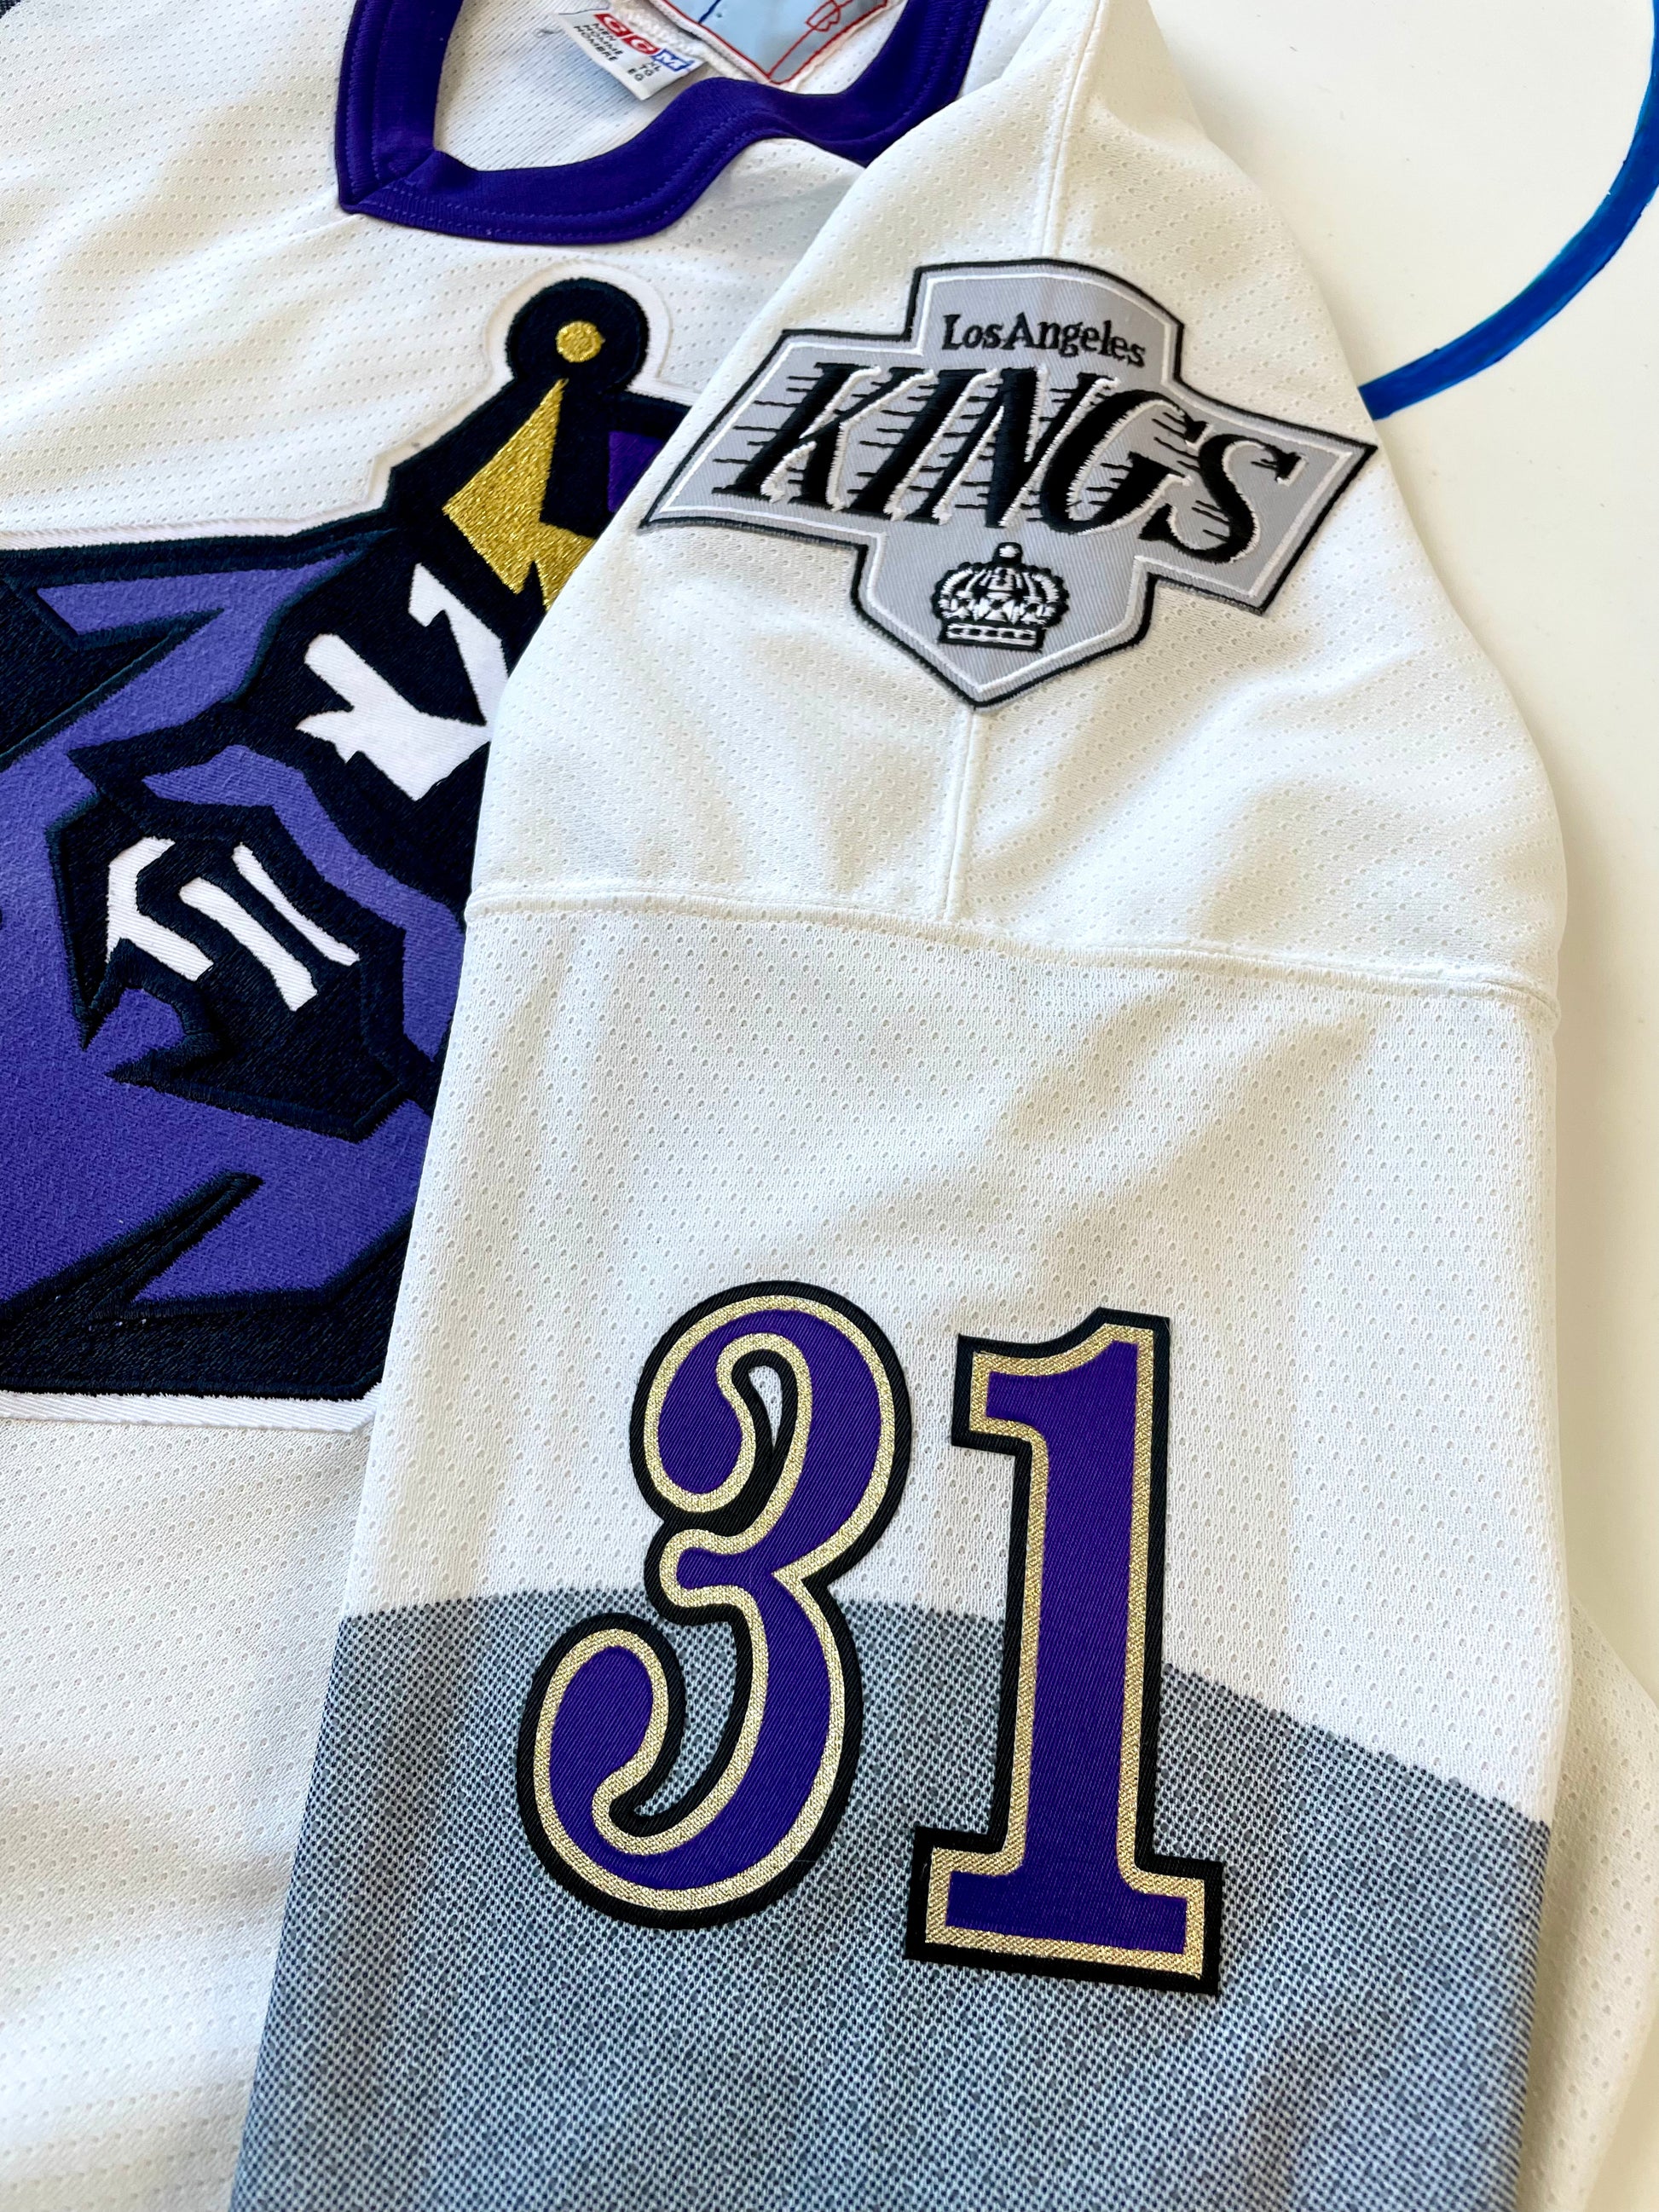 LA Kings 1995-1996 Byron Dafoe Burger King Hockey Jersey (XL)